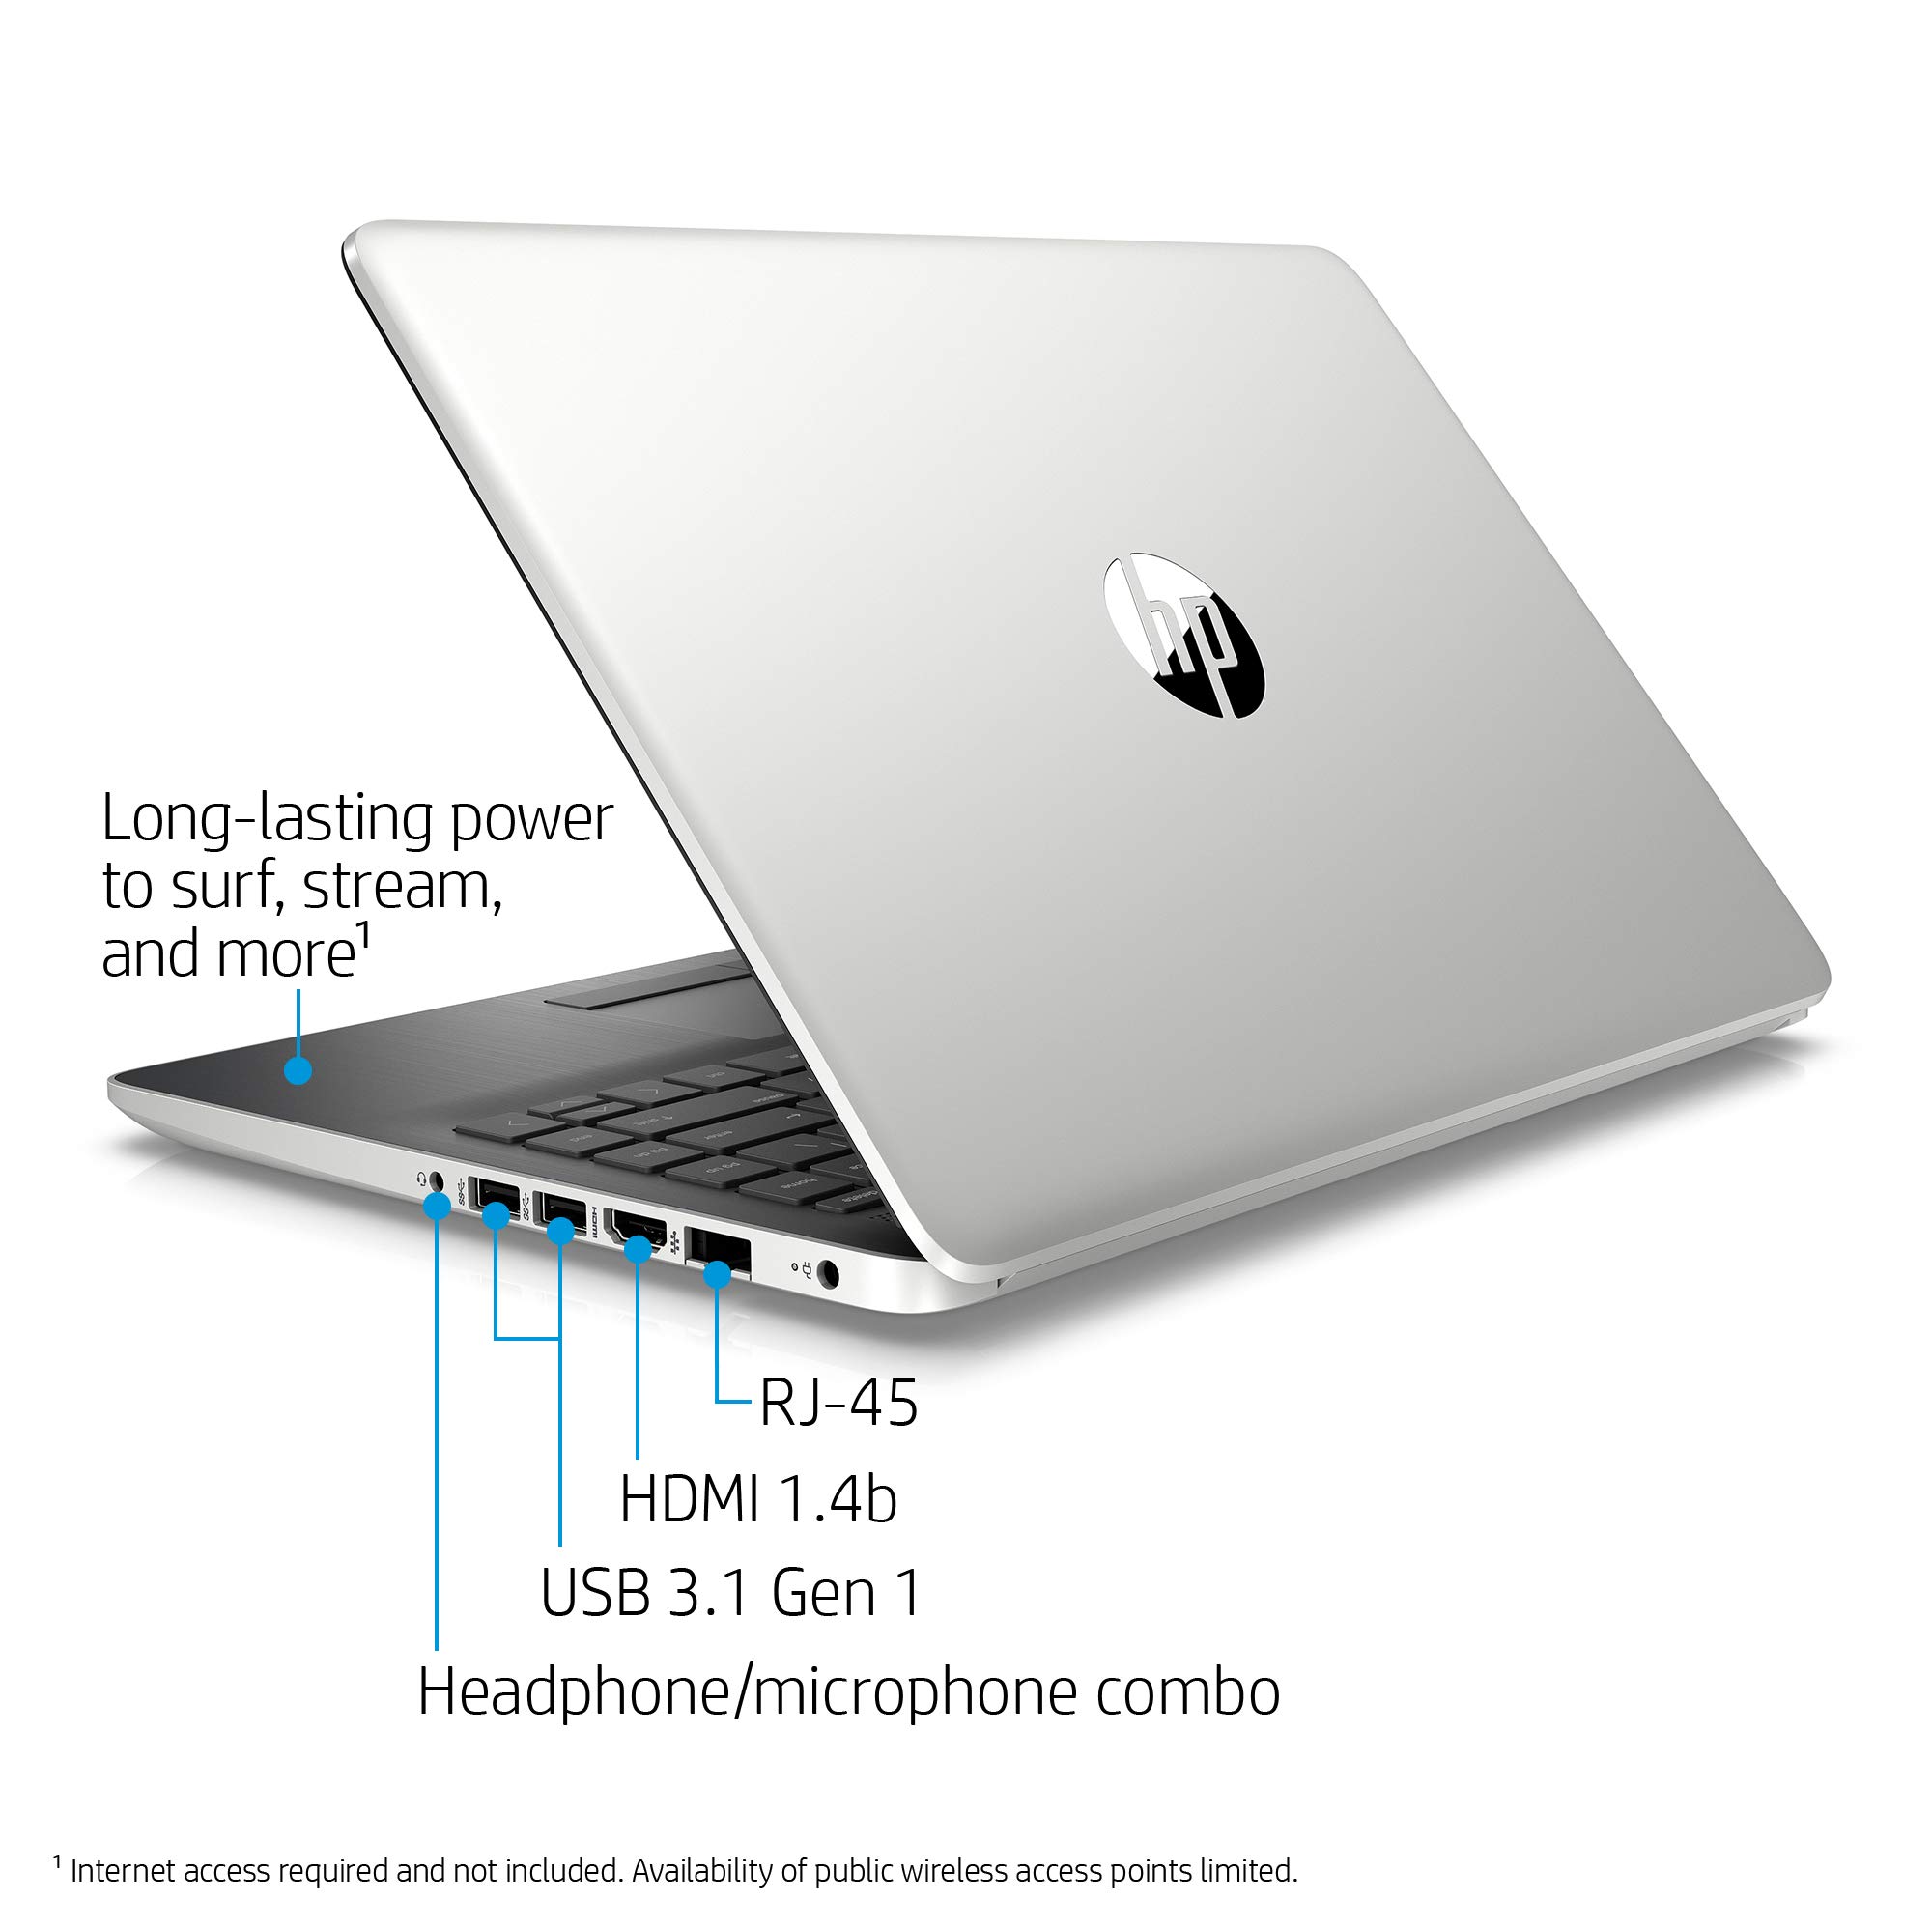 HP 14-inch Laptop, 8th Generation Intel Core i3-8130U Processor, 4 GB SDRAM, 128 GB Solid State Drive, Windows 10 Home in S Mode (14-df0020nr, Natural Silver)